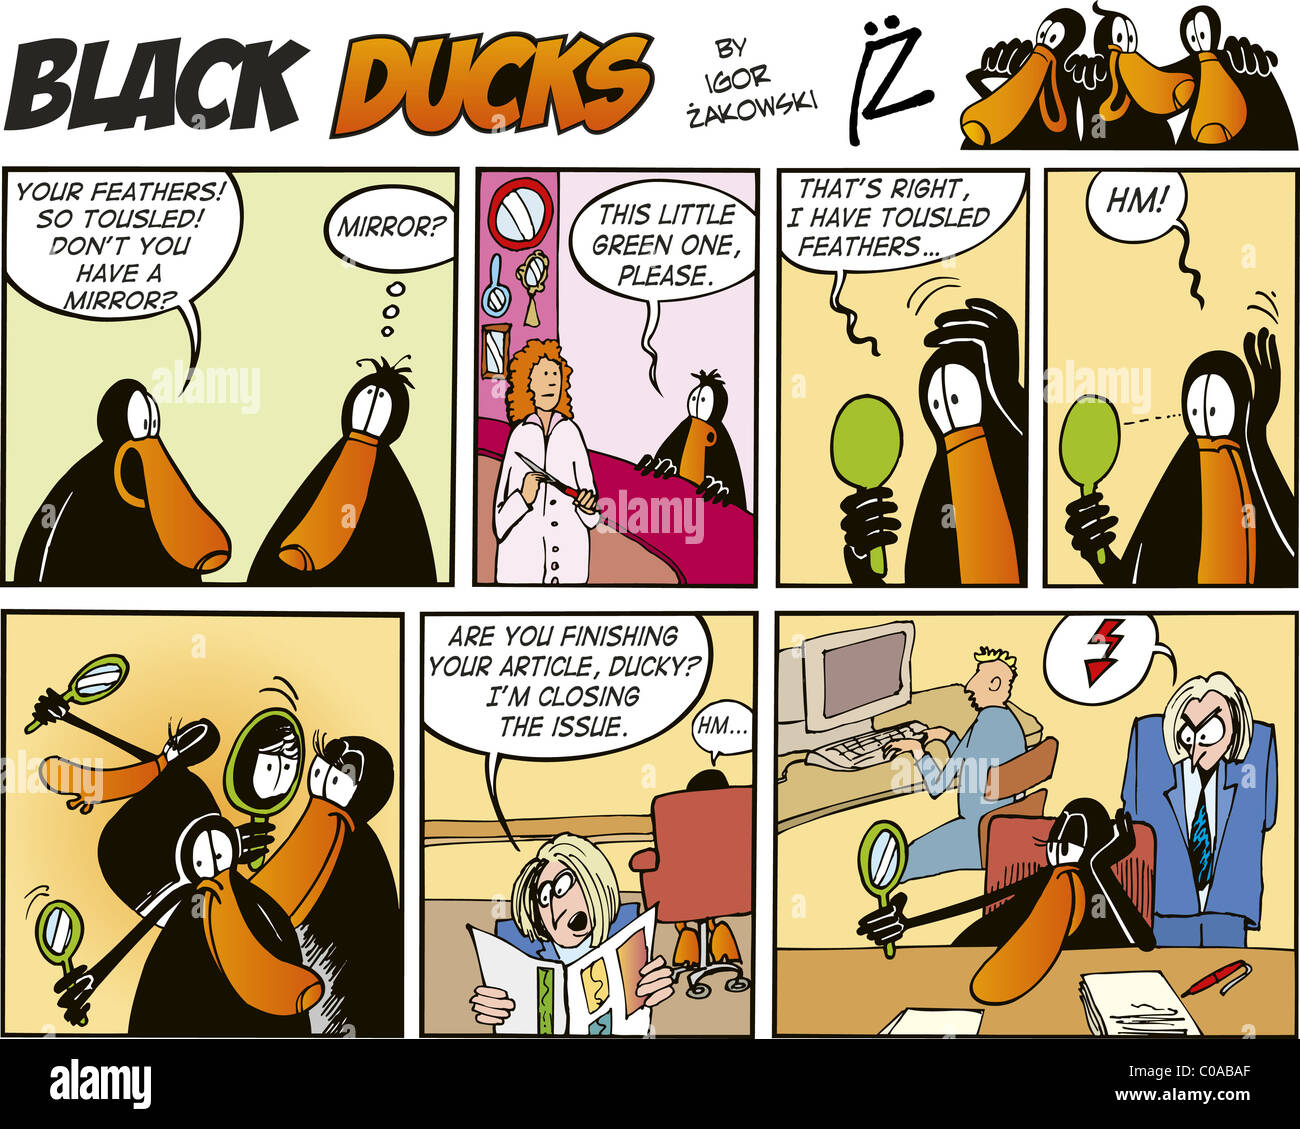 Black Ducks Comic Strip episode 57 Stock Photo